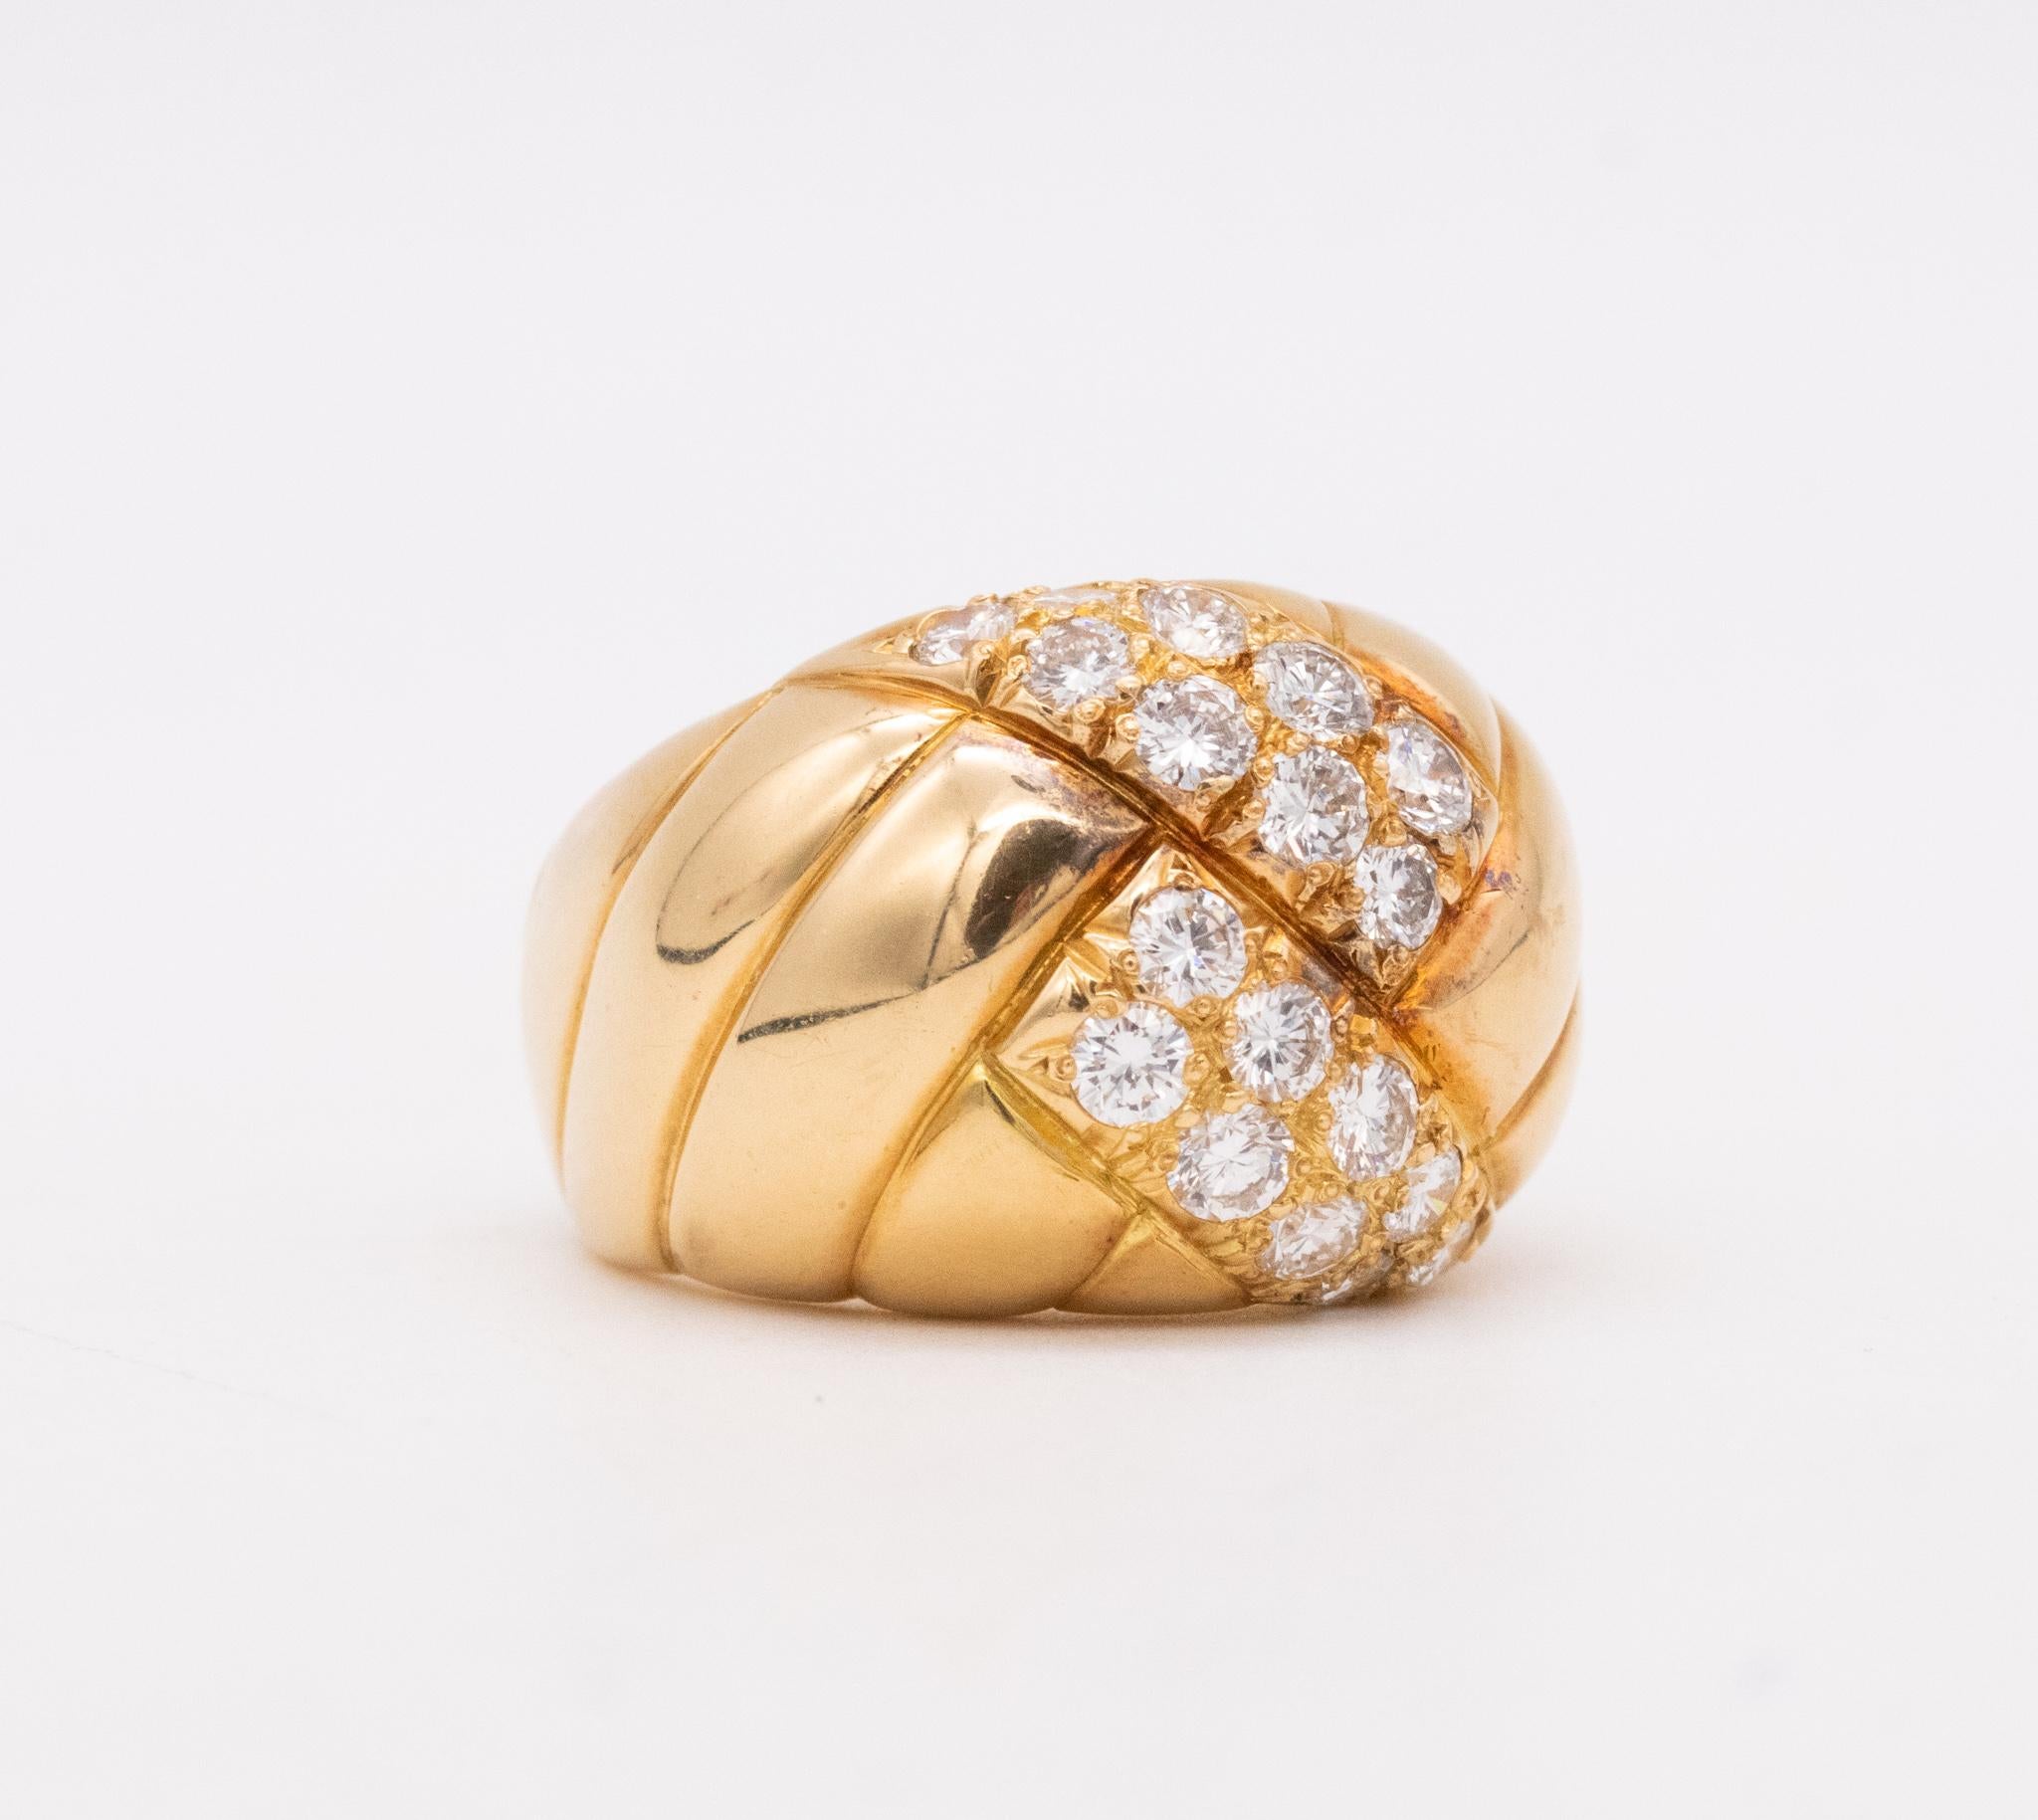 Van Cleef Arpels 1970 Paris Bombe Cocktail Ring 18Kt Gold 1.26 Cts VVS Diamonds For Sale 1